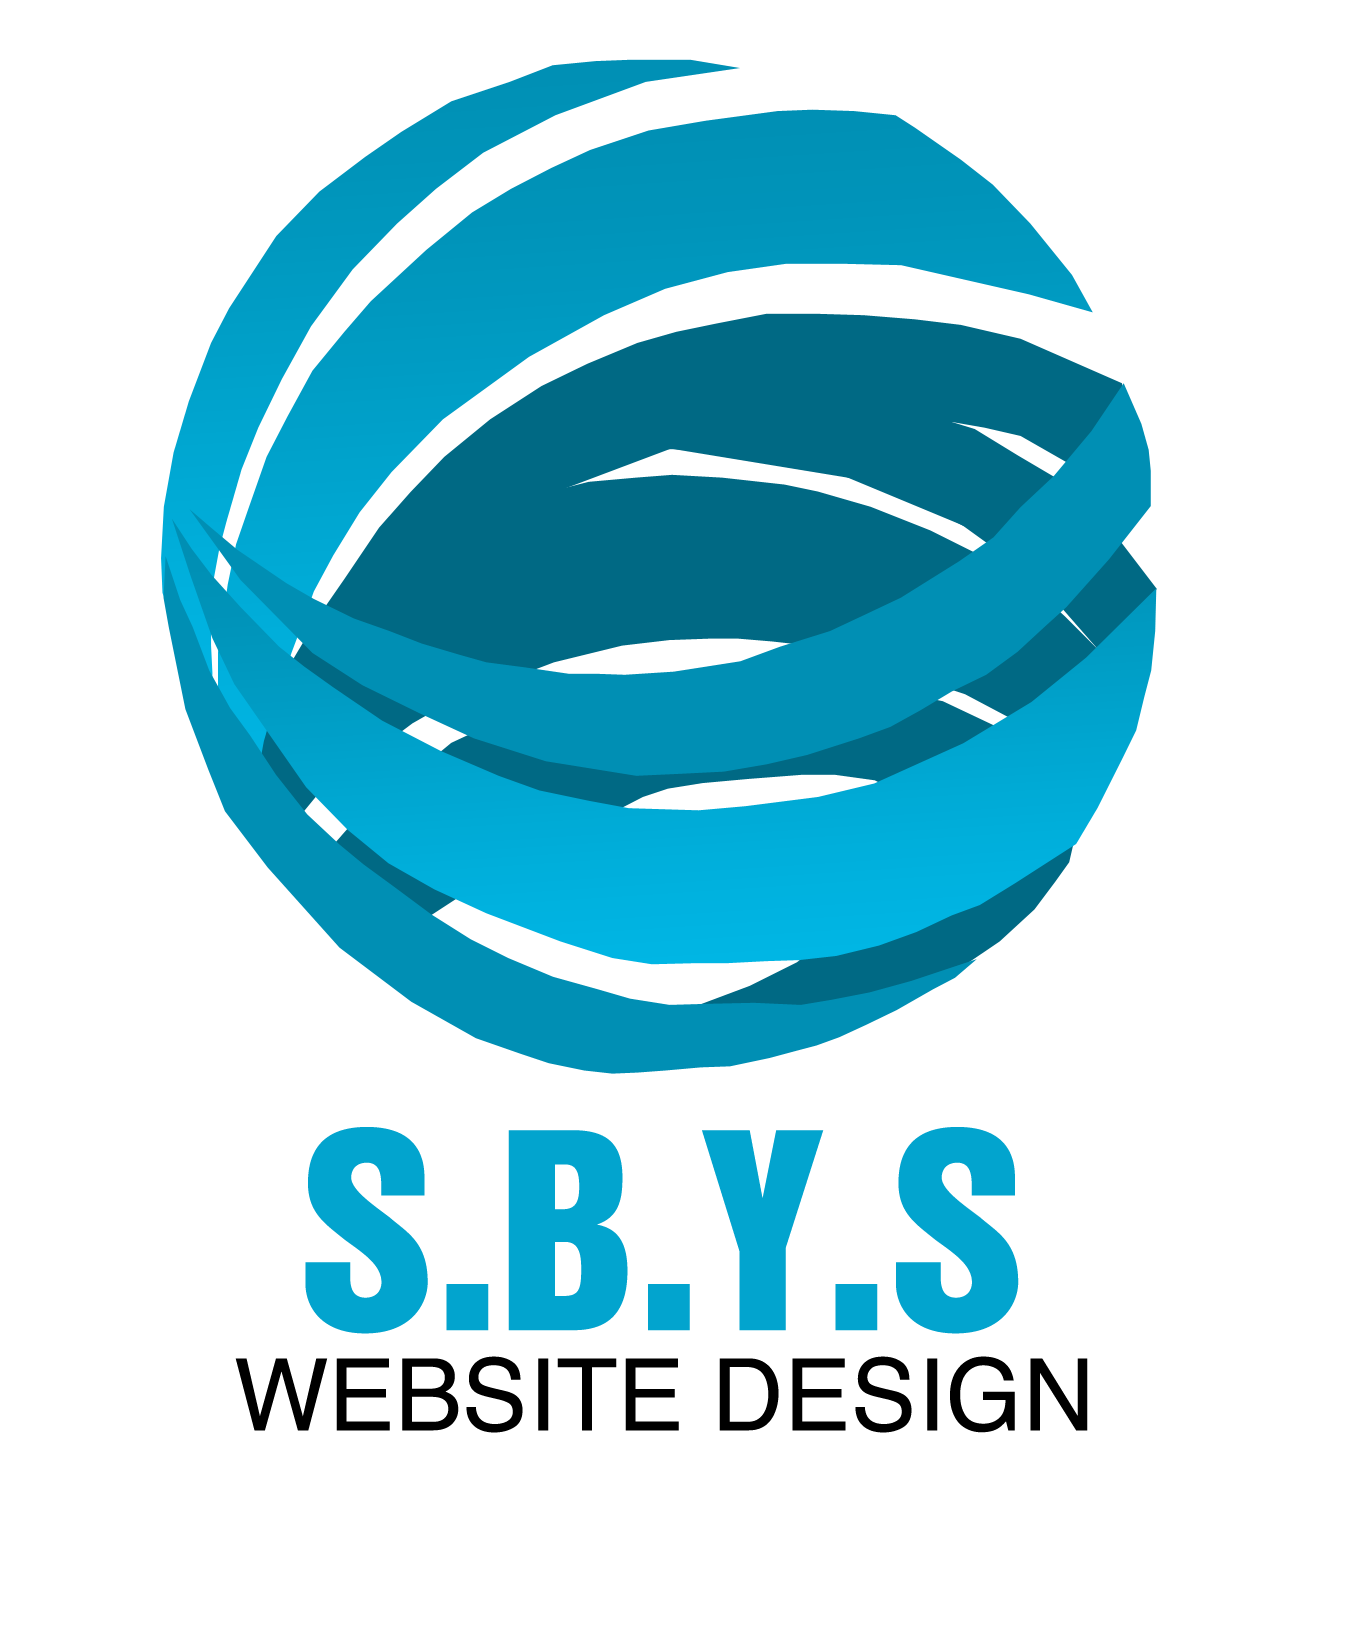 S.B.Y.S. & Associates